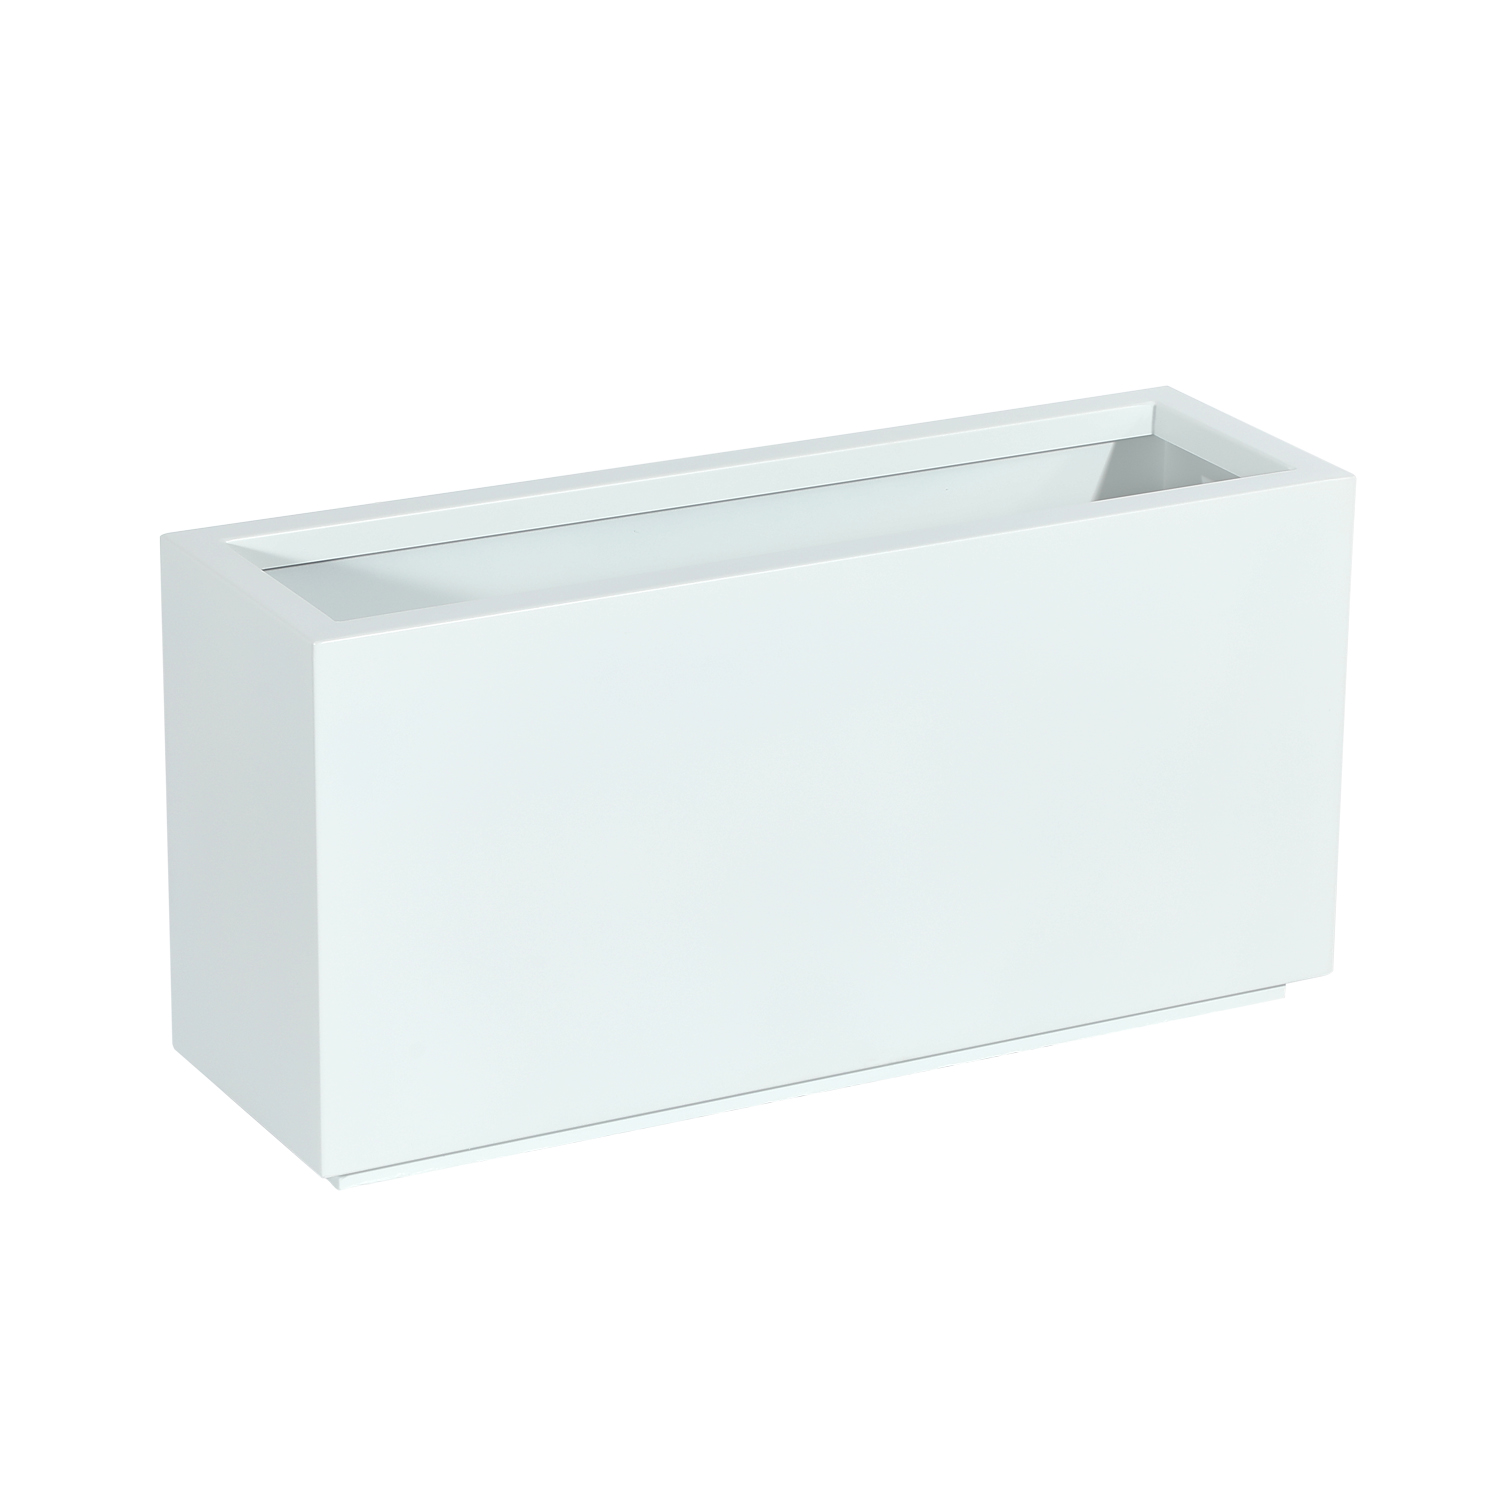 stainless steel rectangular planter box